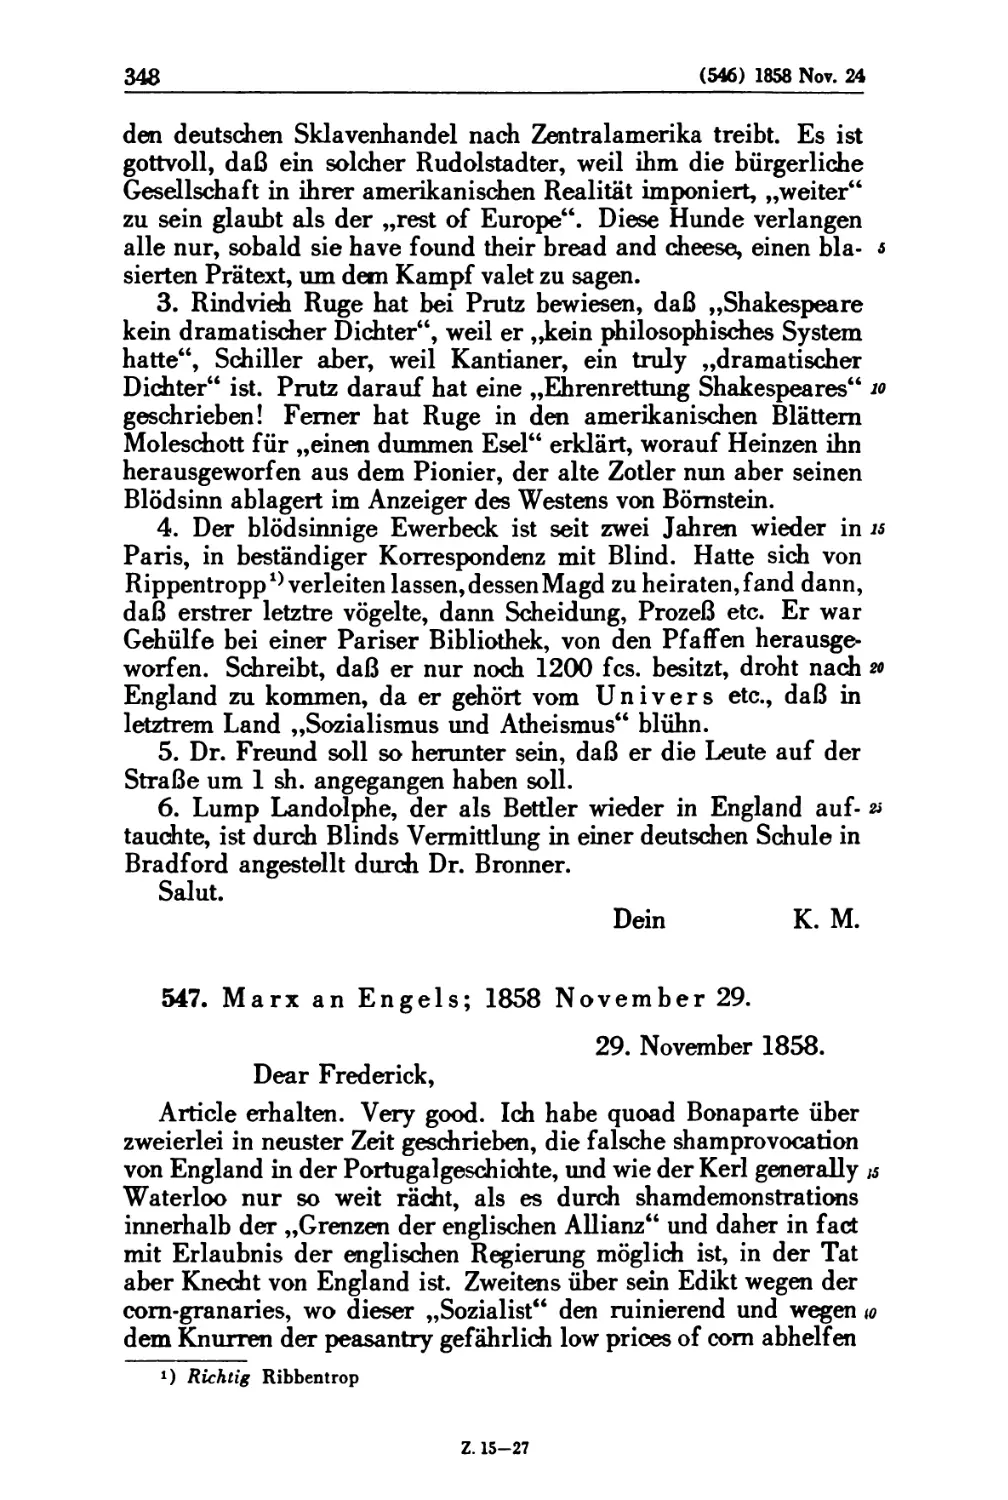 547. Marx an Engels; 1858 November 29